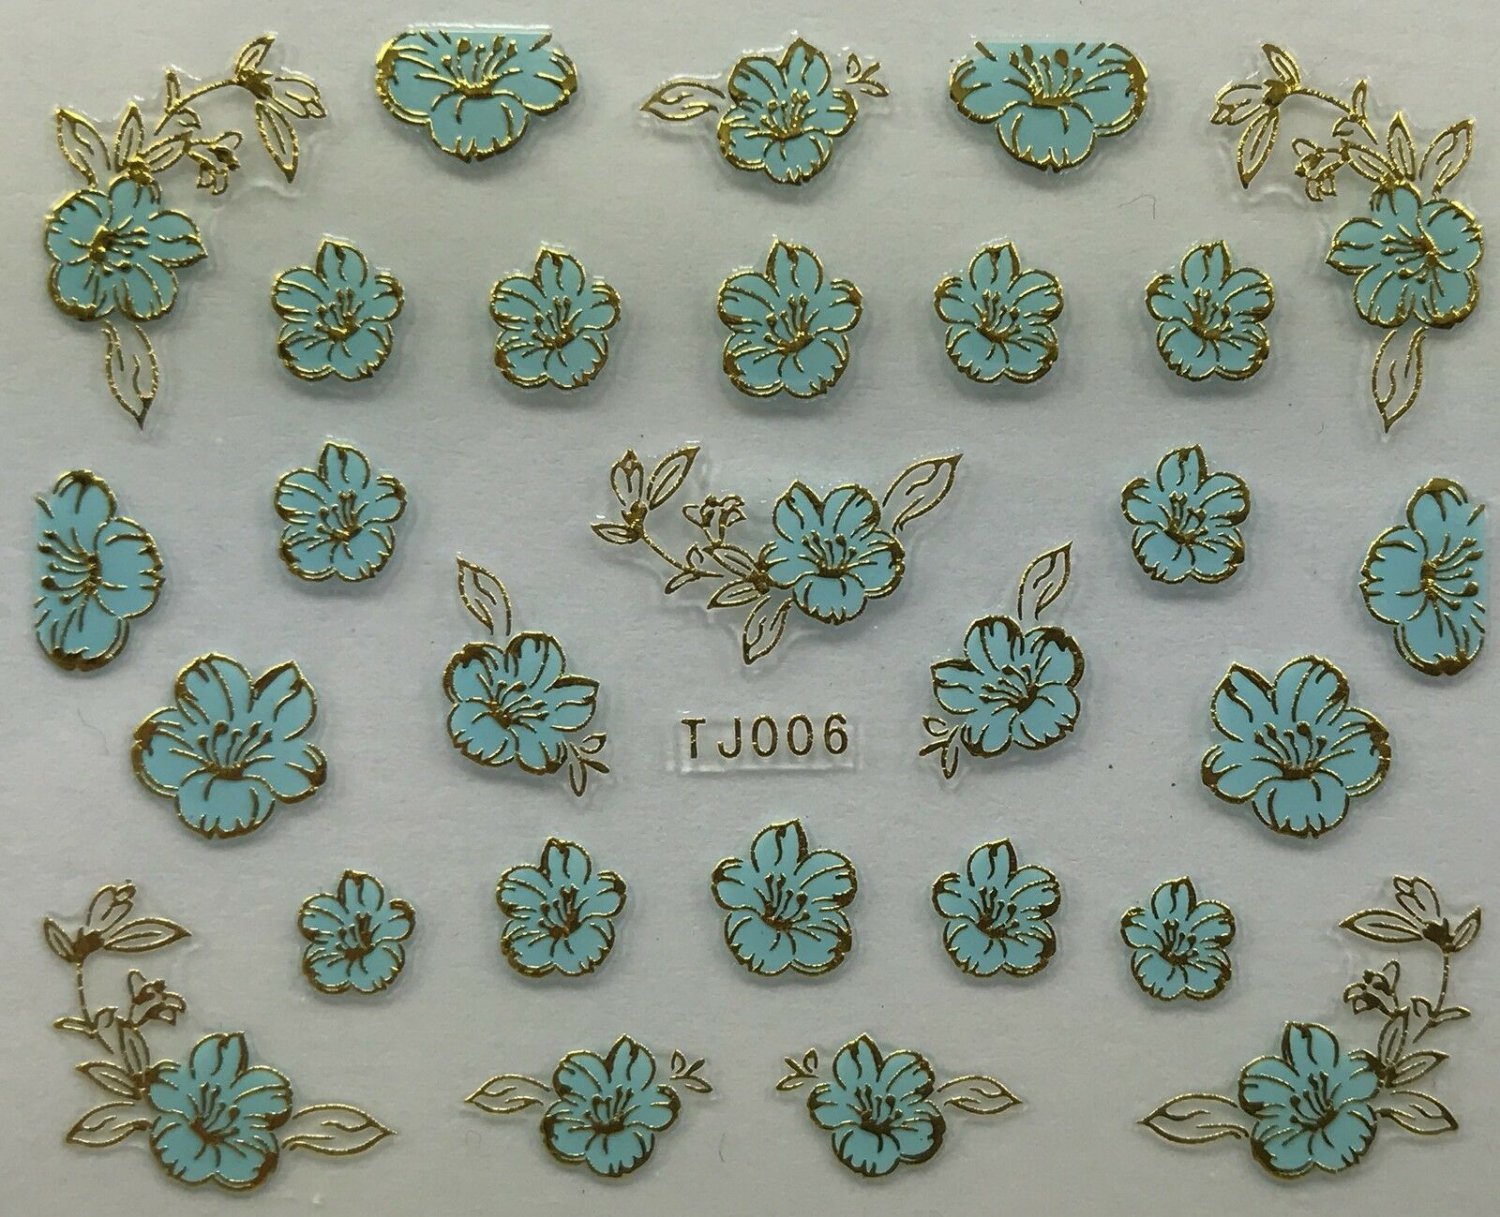 TM Nail Art 3D Decal Stickers Pretty Flowers Various Colors TJ006 BLUE & GOLD